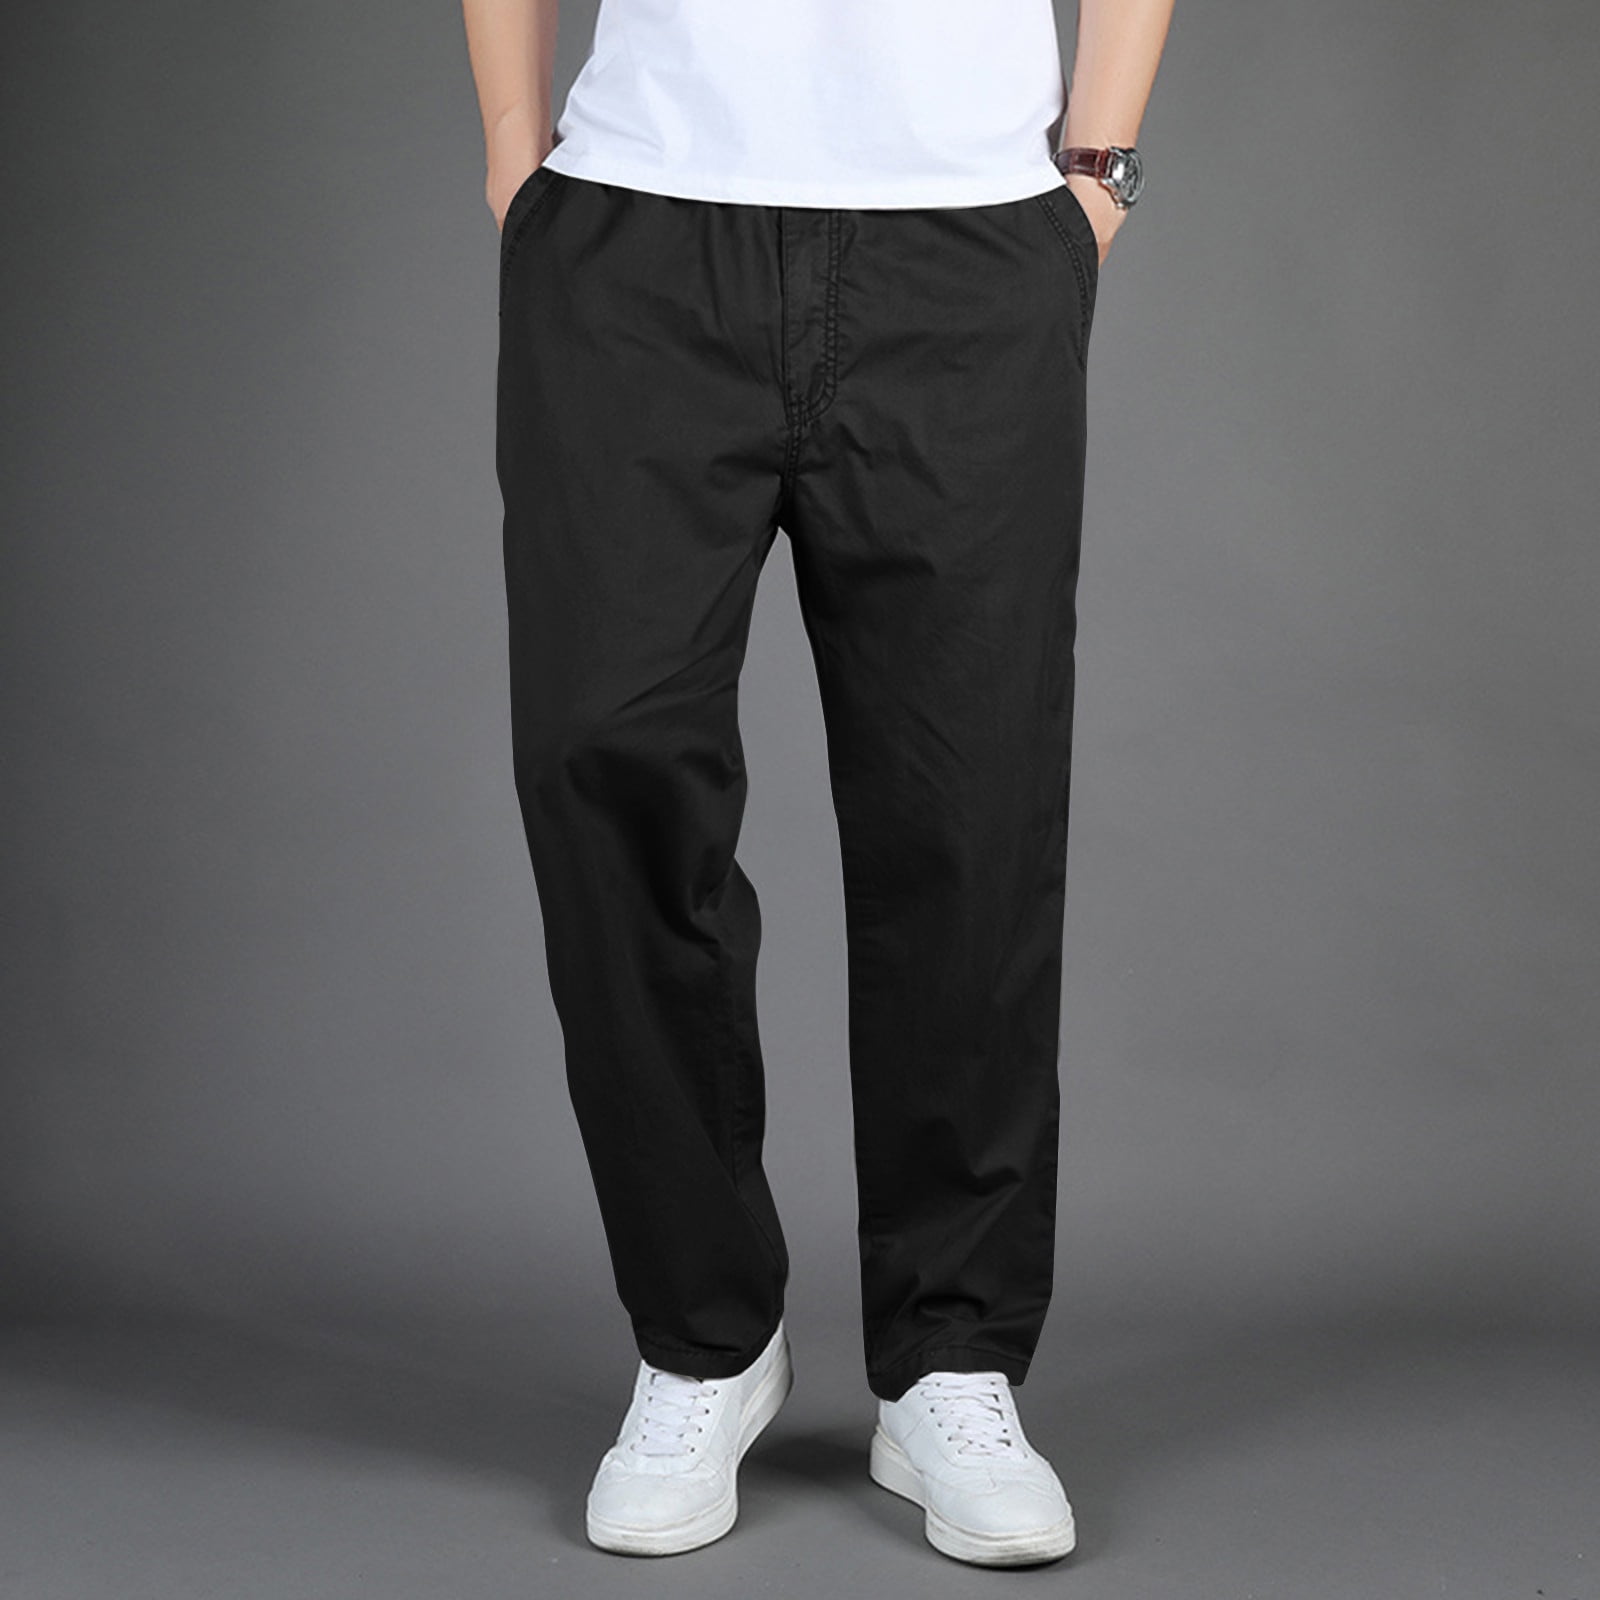 MRULIC jeans for men Mens Fashion Casual Loose Cotton Plus Size Pocket ...